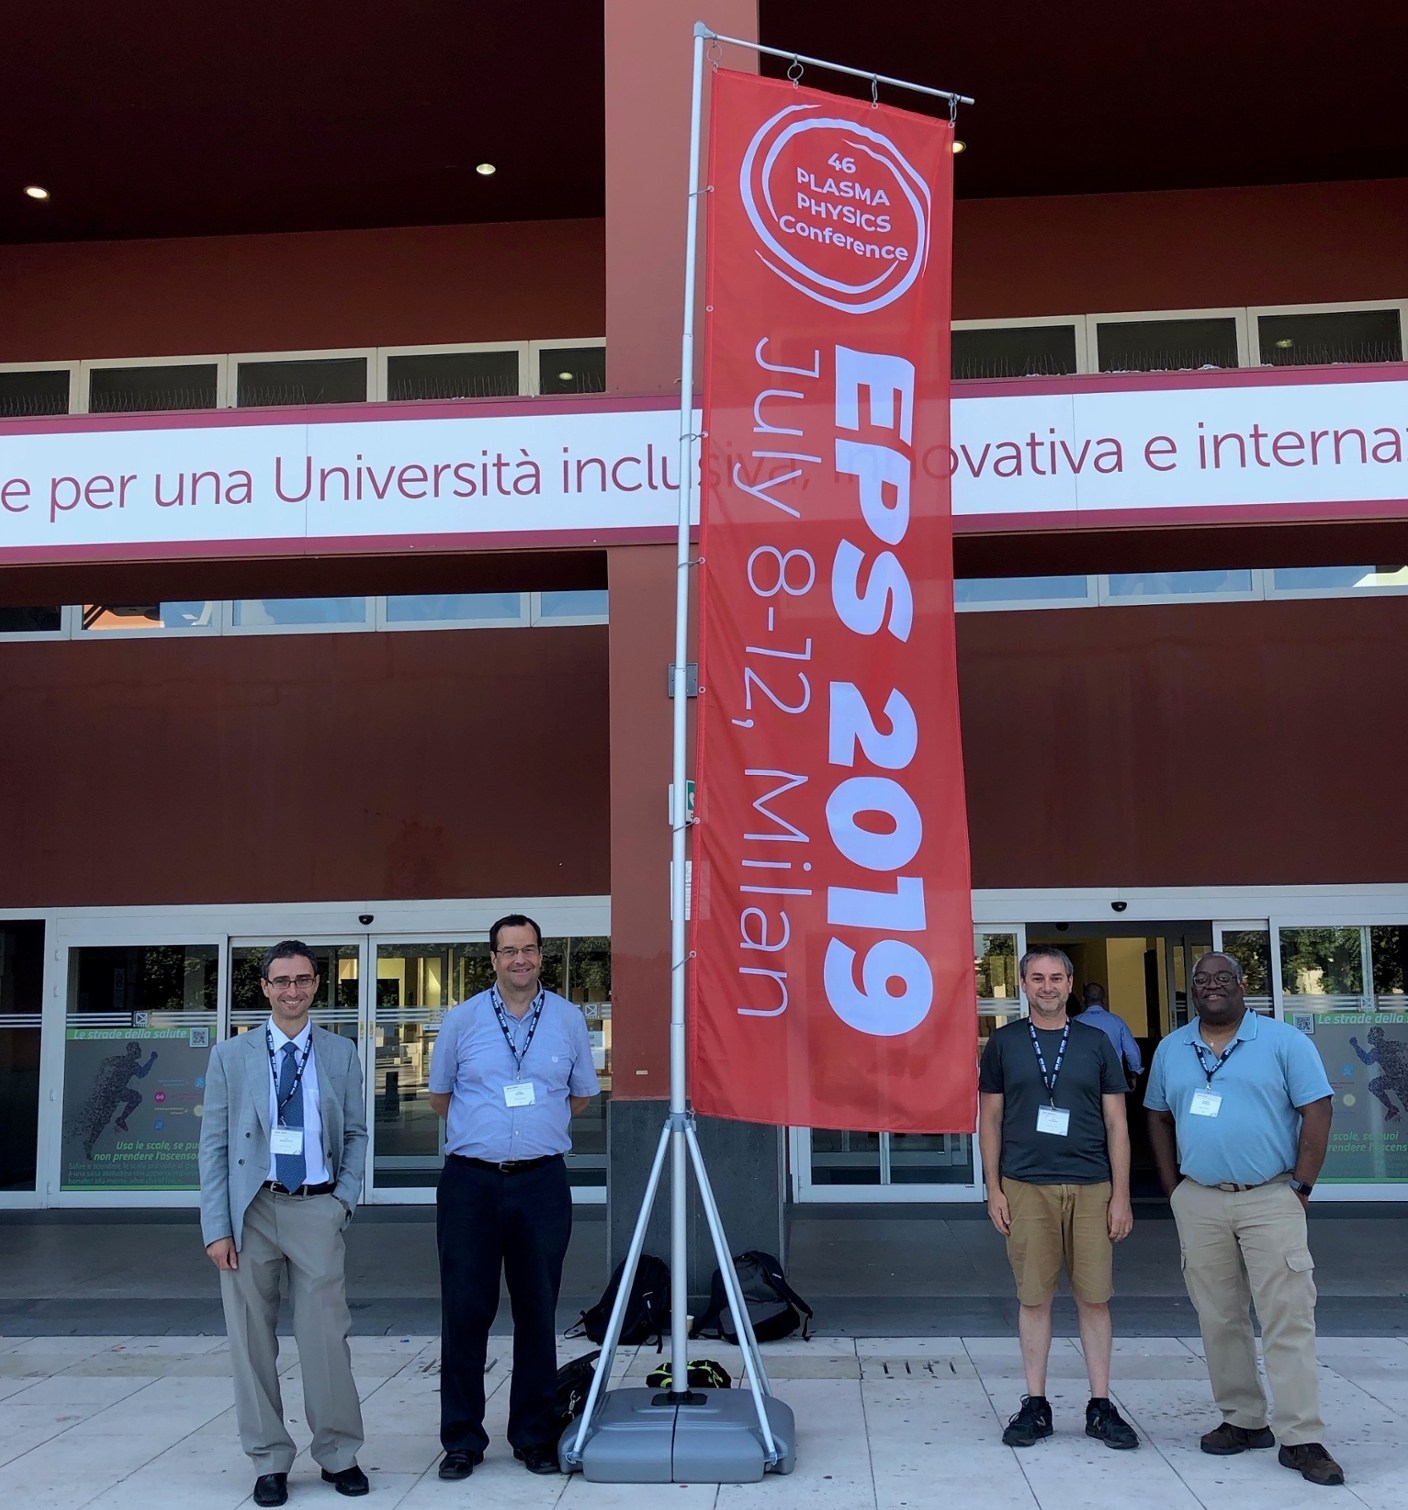 Luca Guazzotto, David Maurer, John Schmitt and Edward Thomas at the 46th Plasma Physics Conference